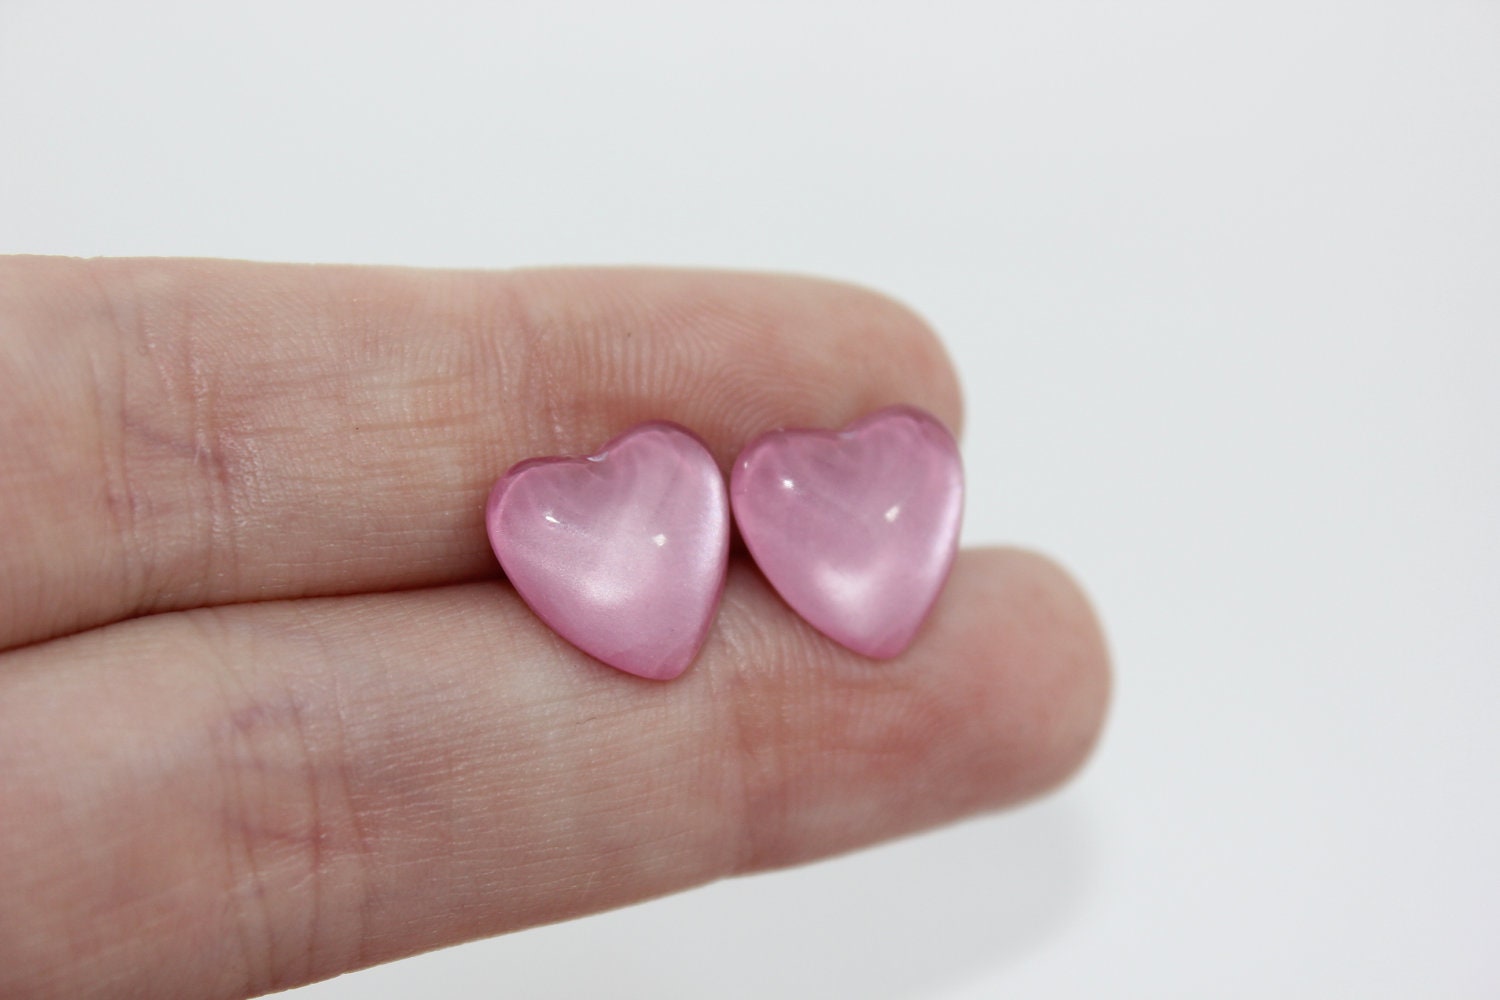 Pink Shimmery Heart Nail Polish Earrings - Silver Plated Post Earrings